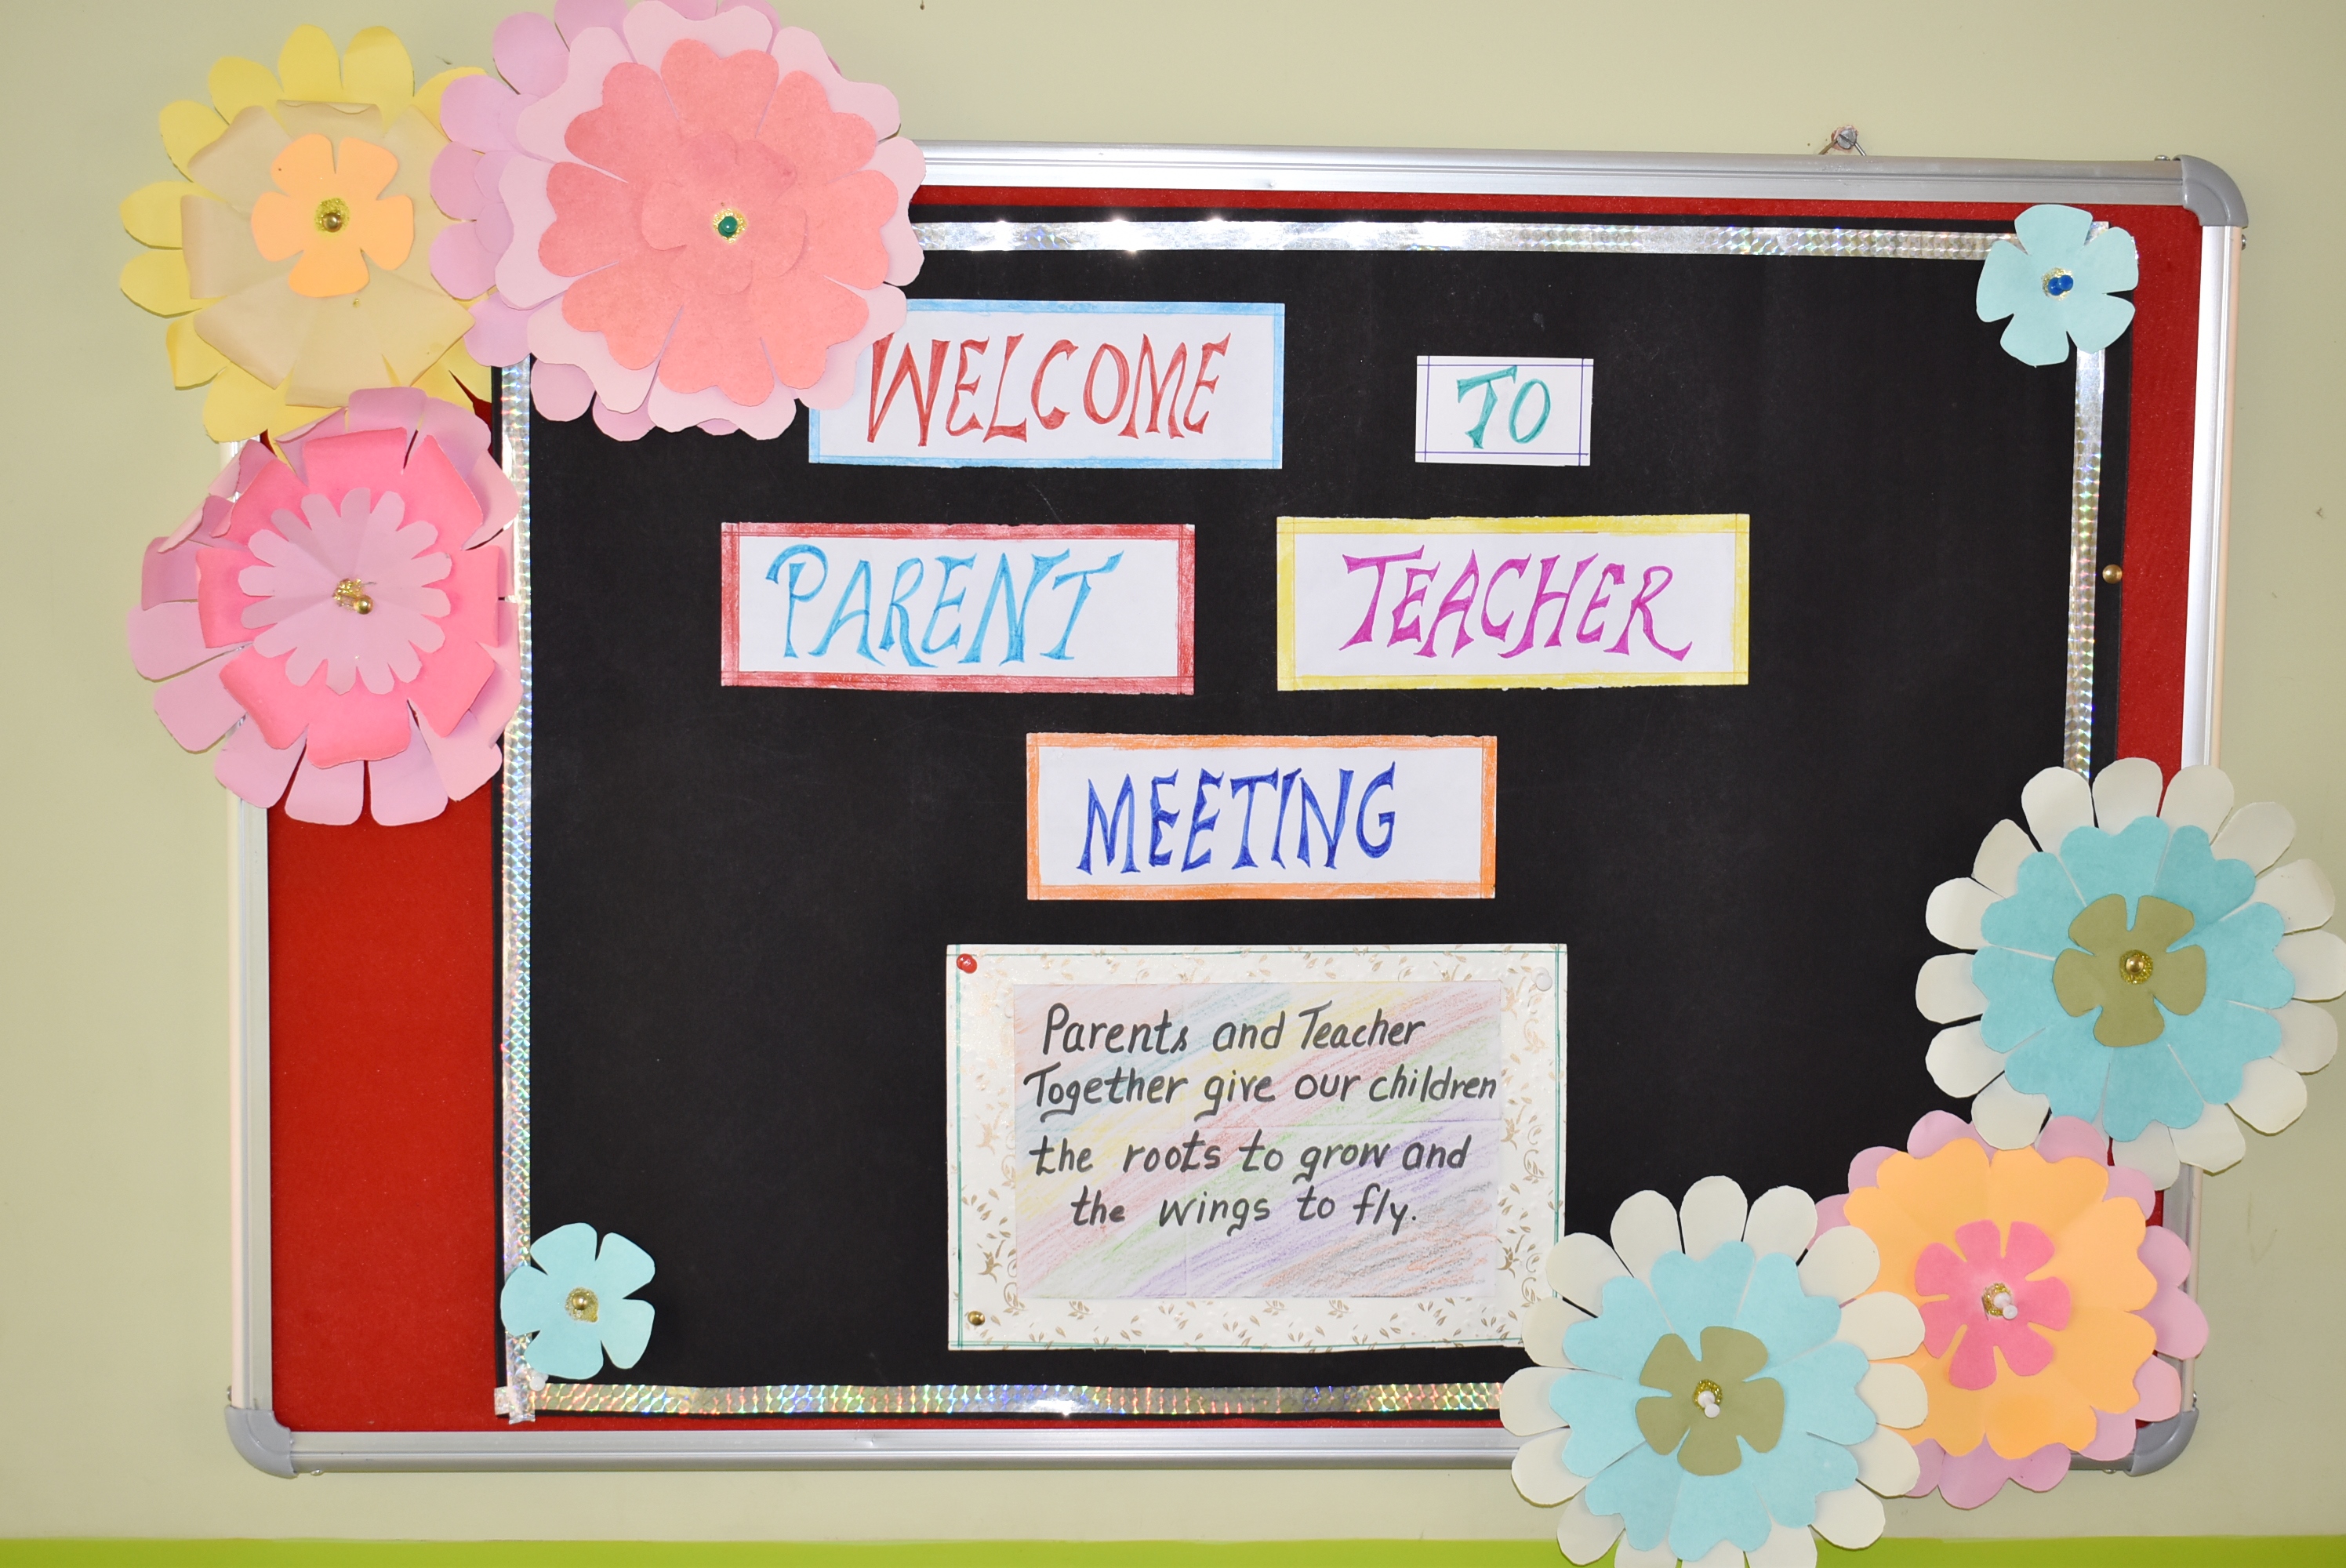 Parent Teachers Meeting held on 29th April 2023